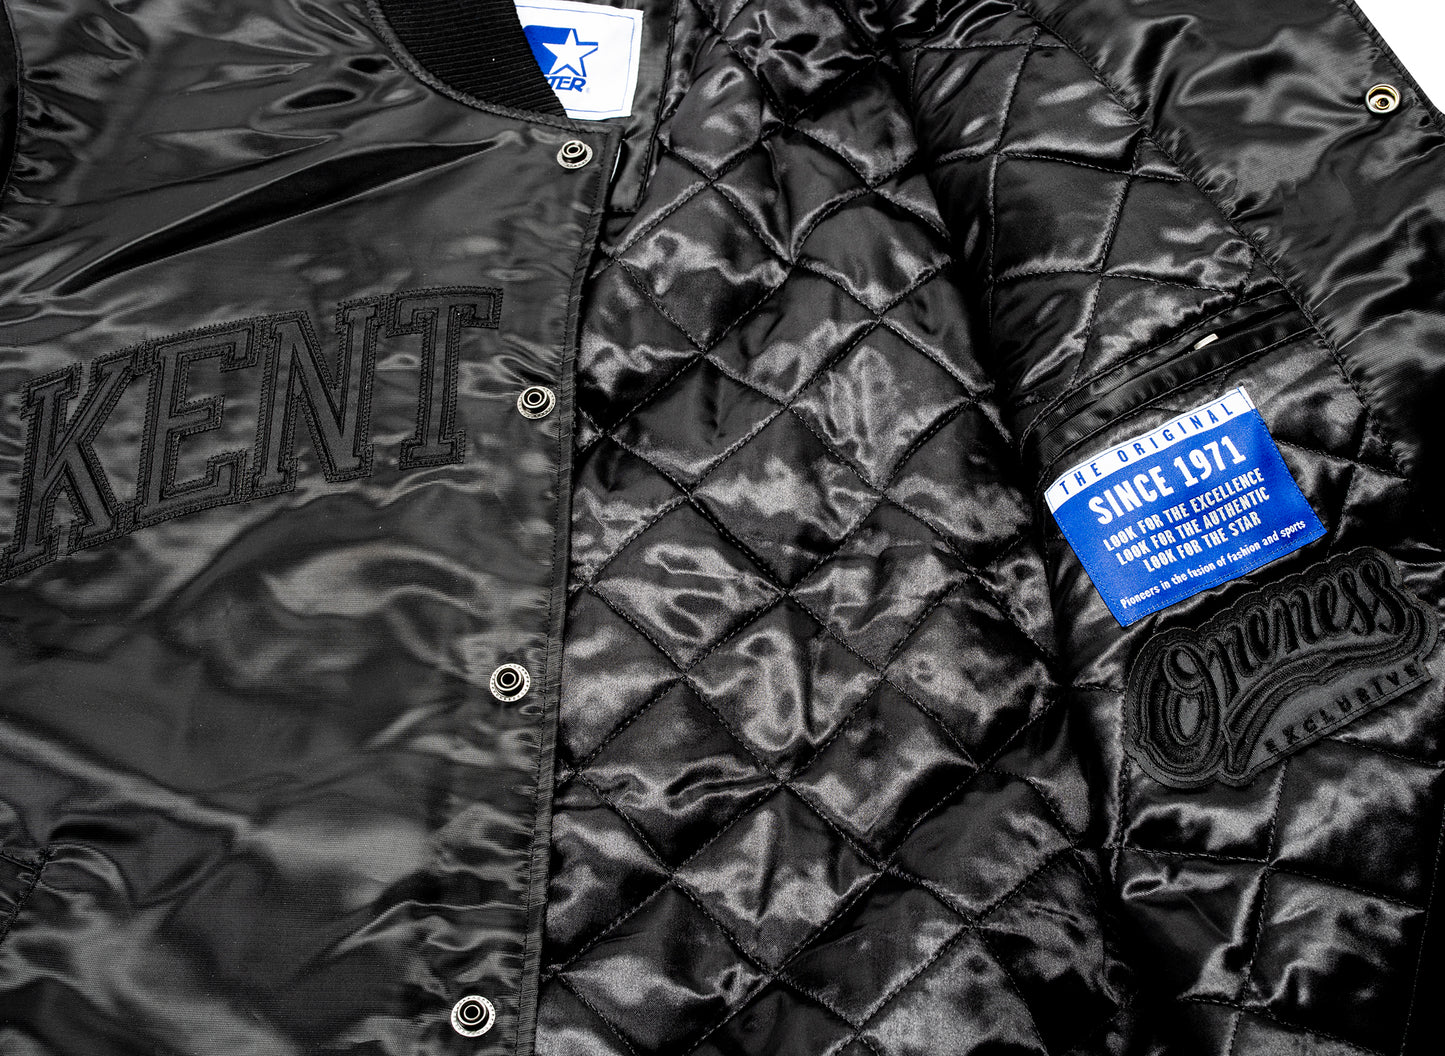 Oneness x Starter University of Kentucky Jacket - Limited Edition Triple Black Exclusive xld